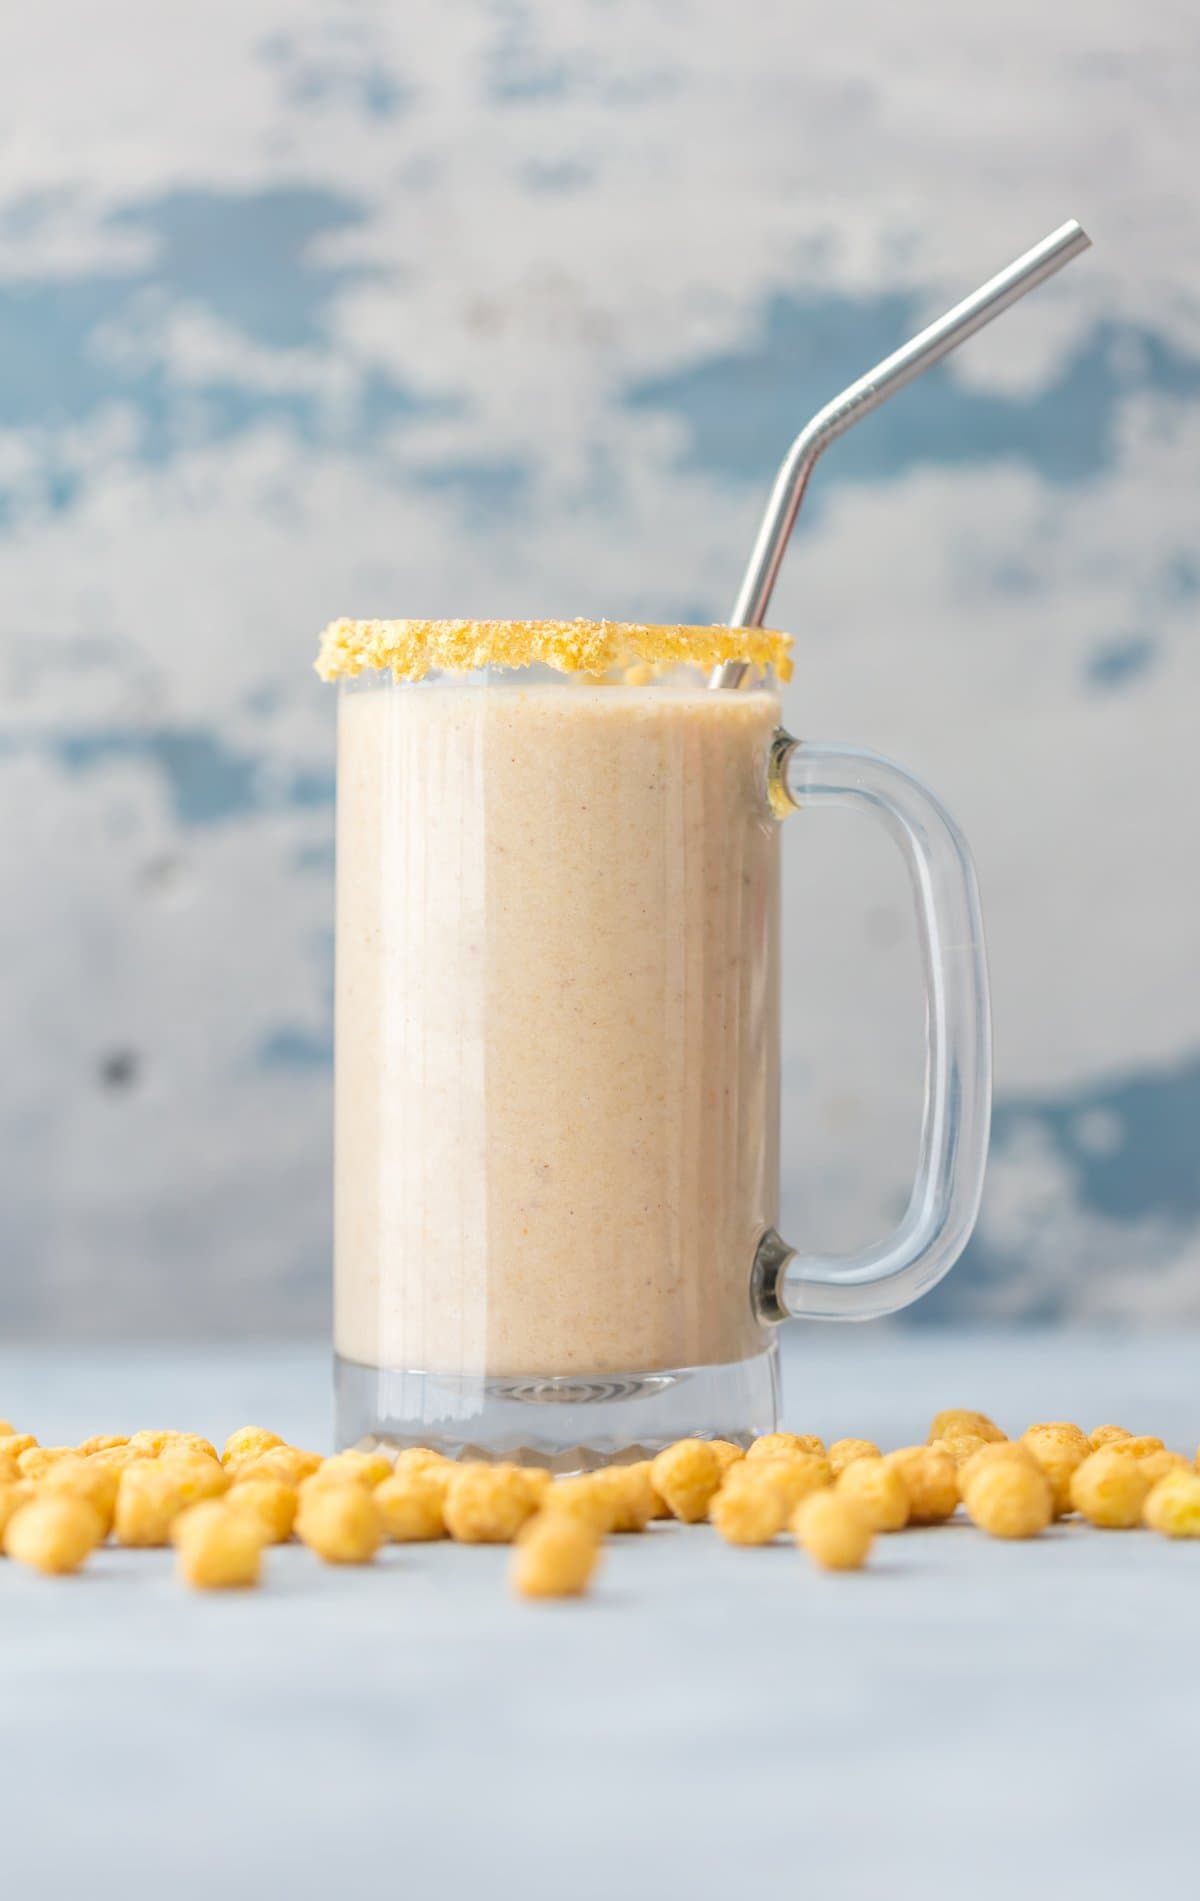 https://www.thecookierookie.com/wp-content/uploads/2017/02/breakfast-cereal-smoothies-3-ways-9-of-14.jpg